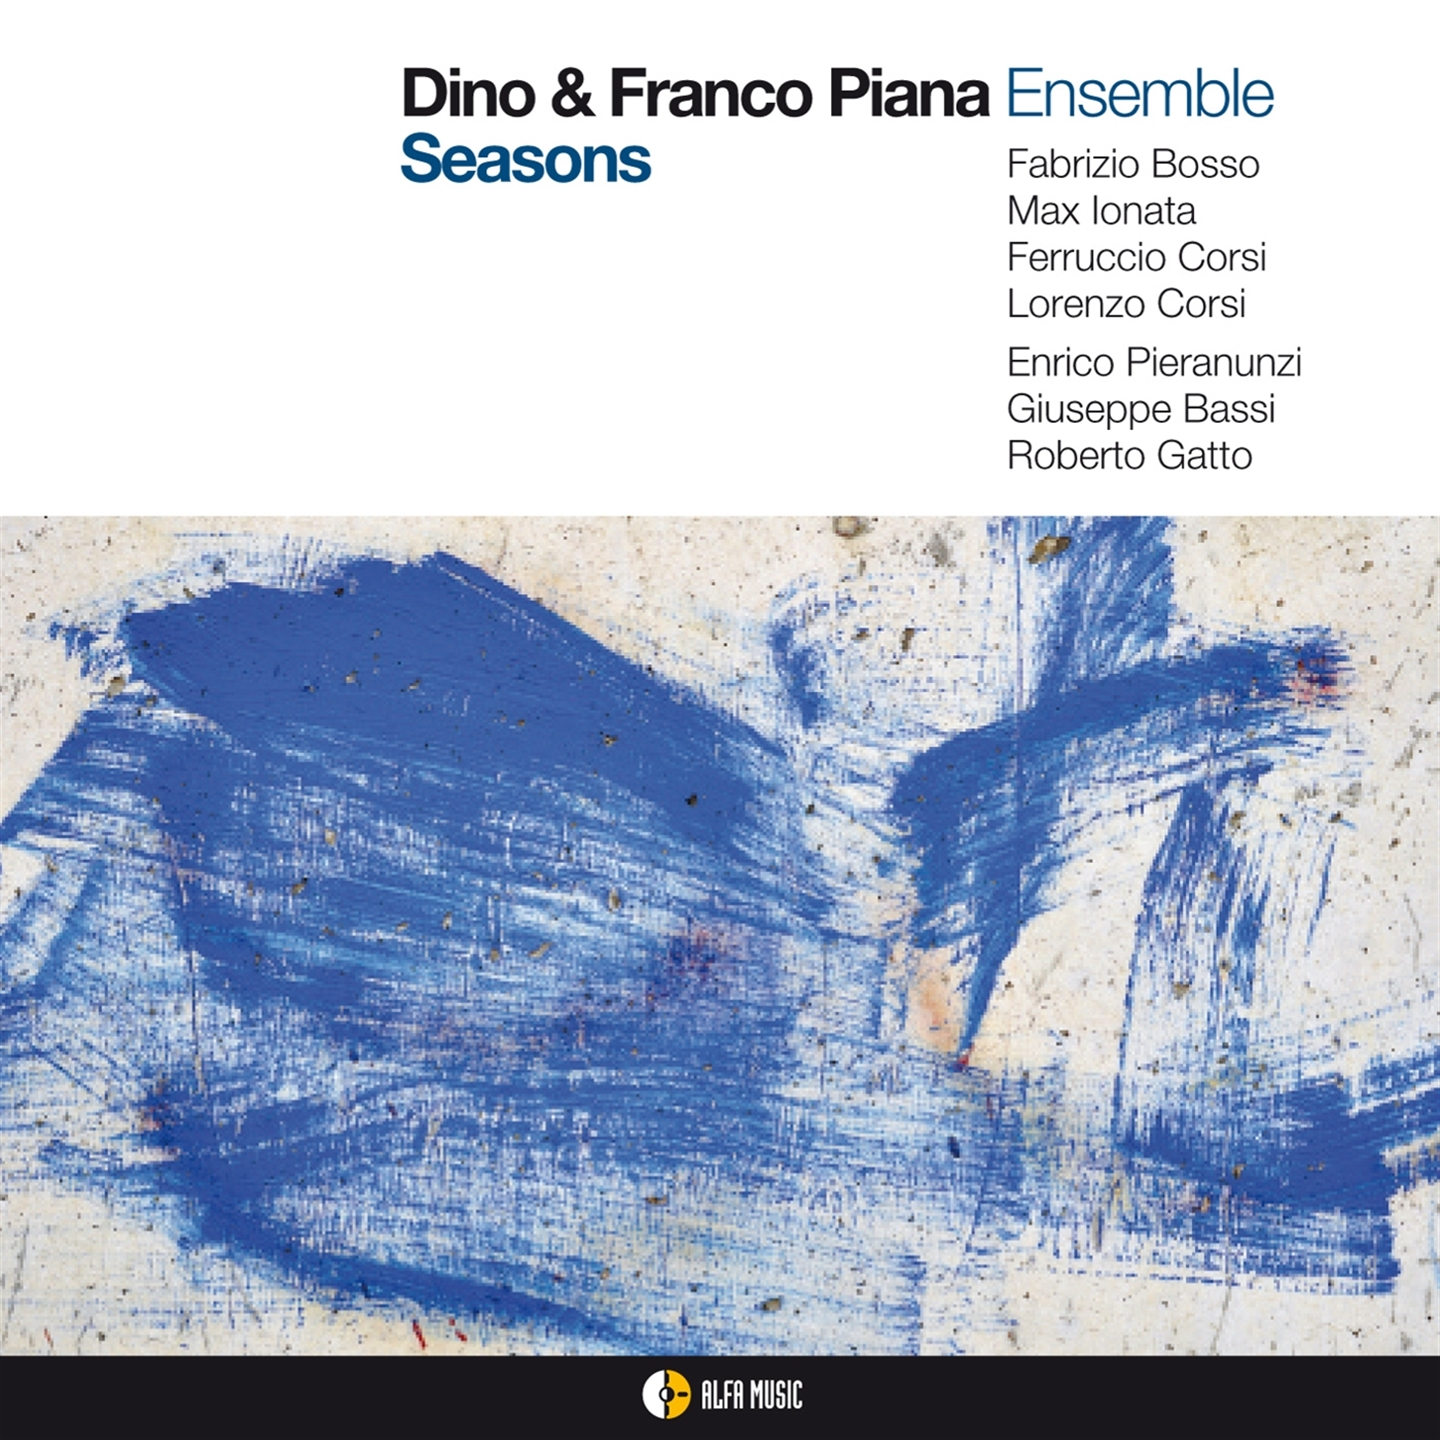 Dino & Franco Piana - Seasons - Imagen 1 de 1